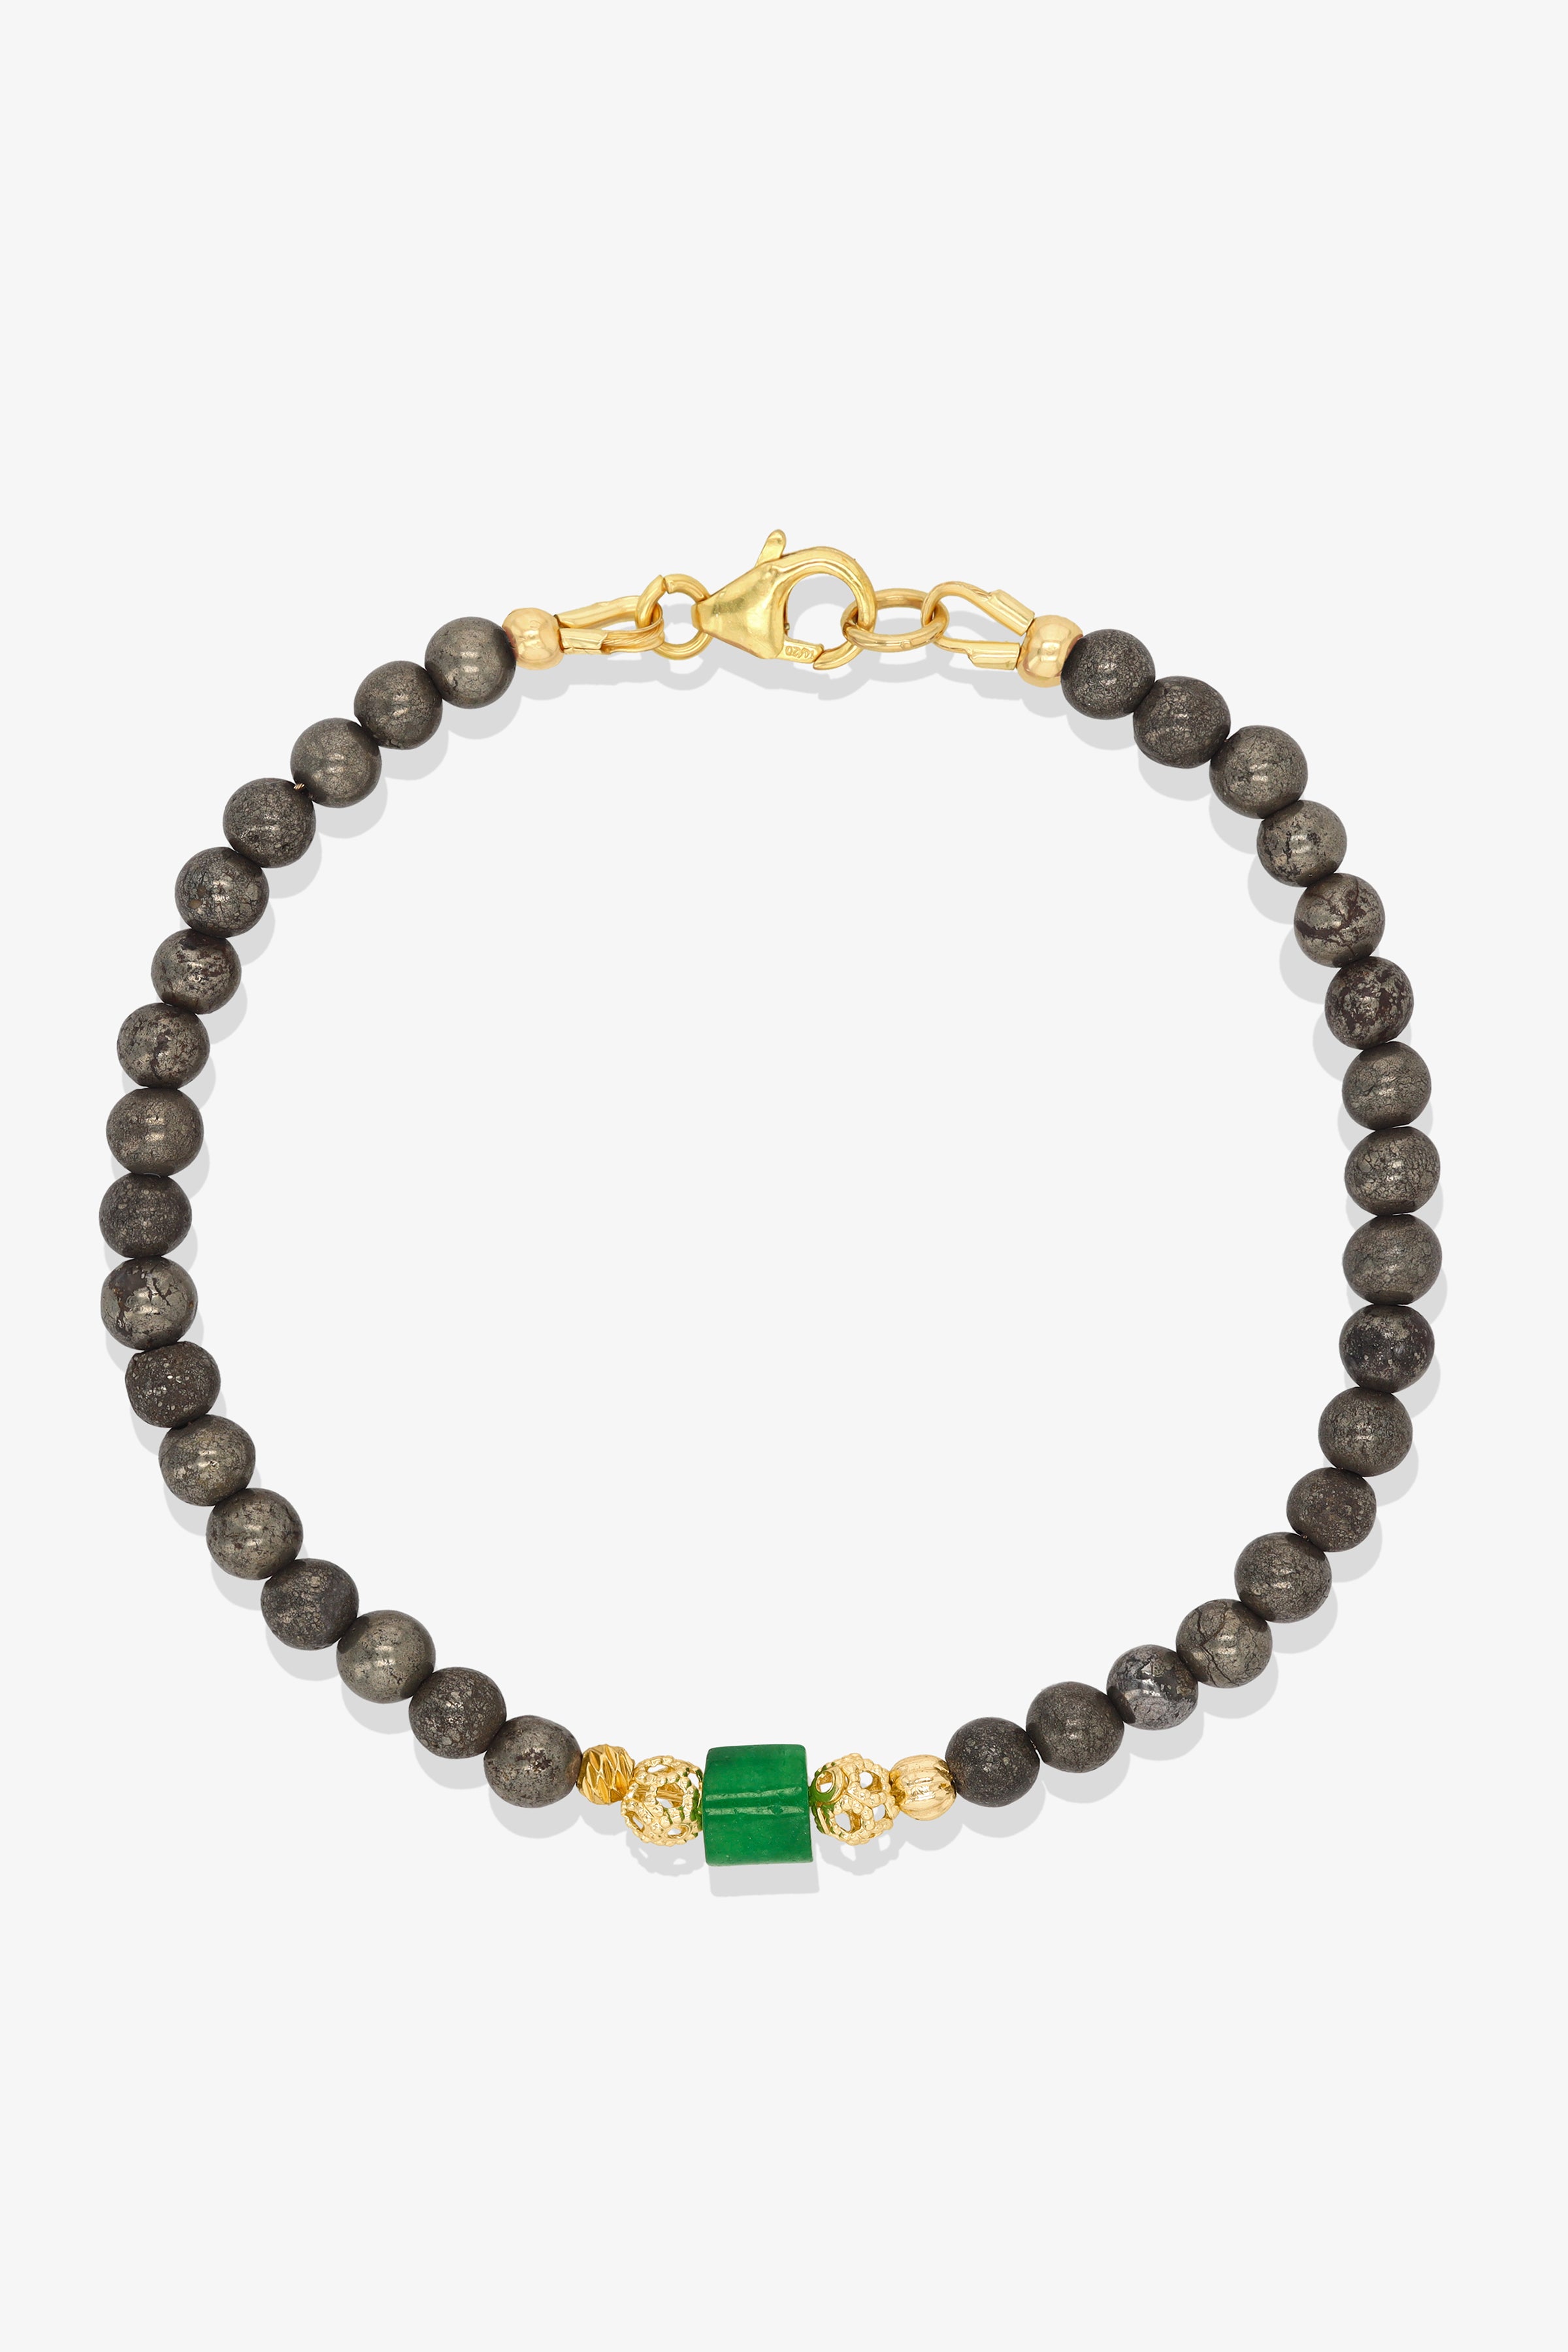 Lava and Jade Gold Vermeil Crystal Bracelet - Grounding